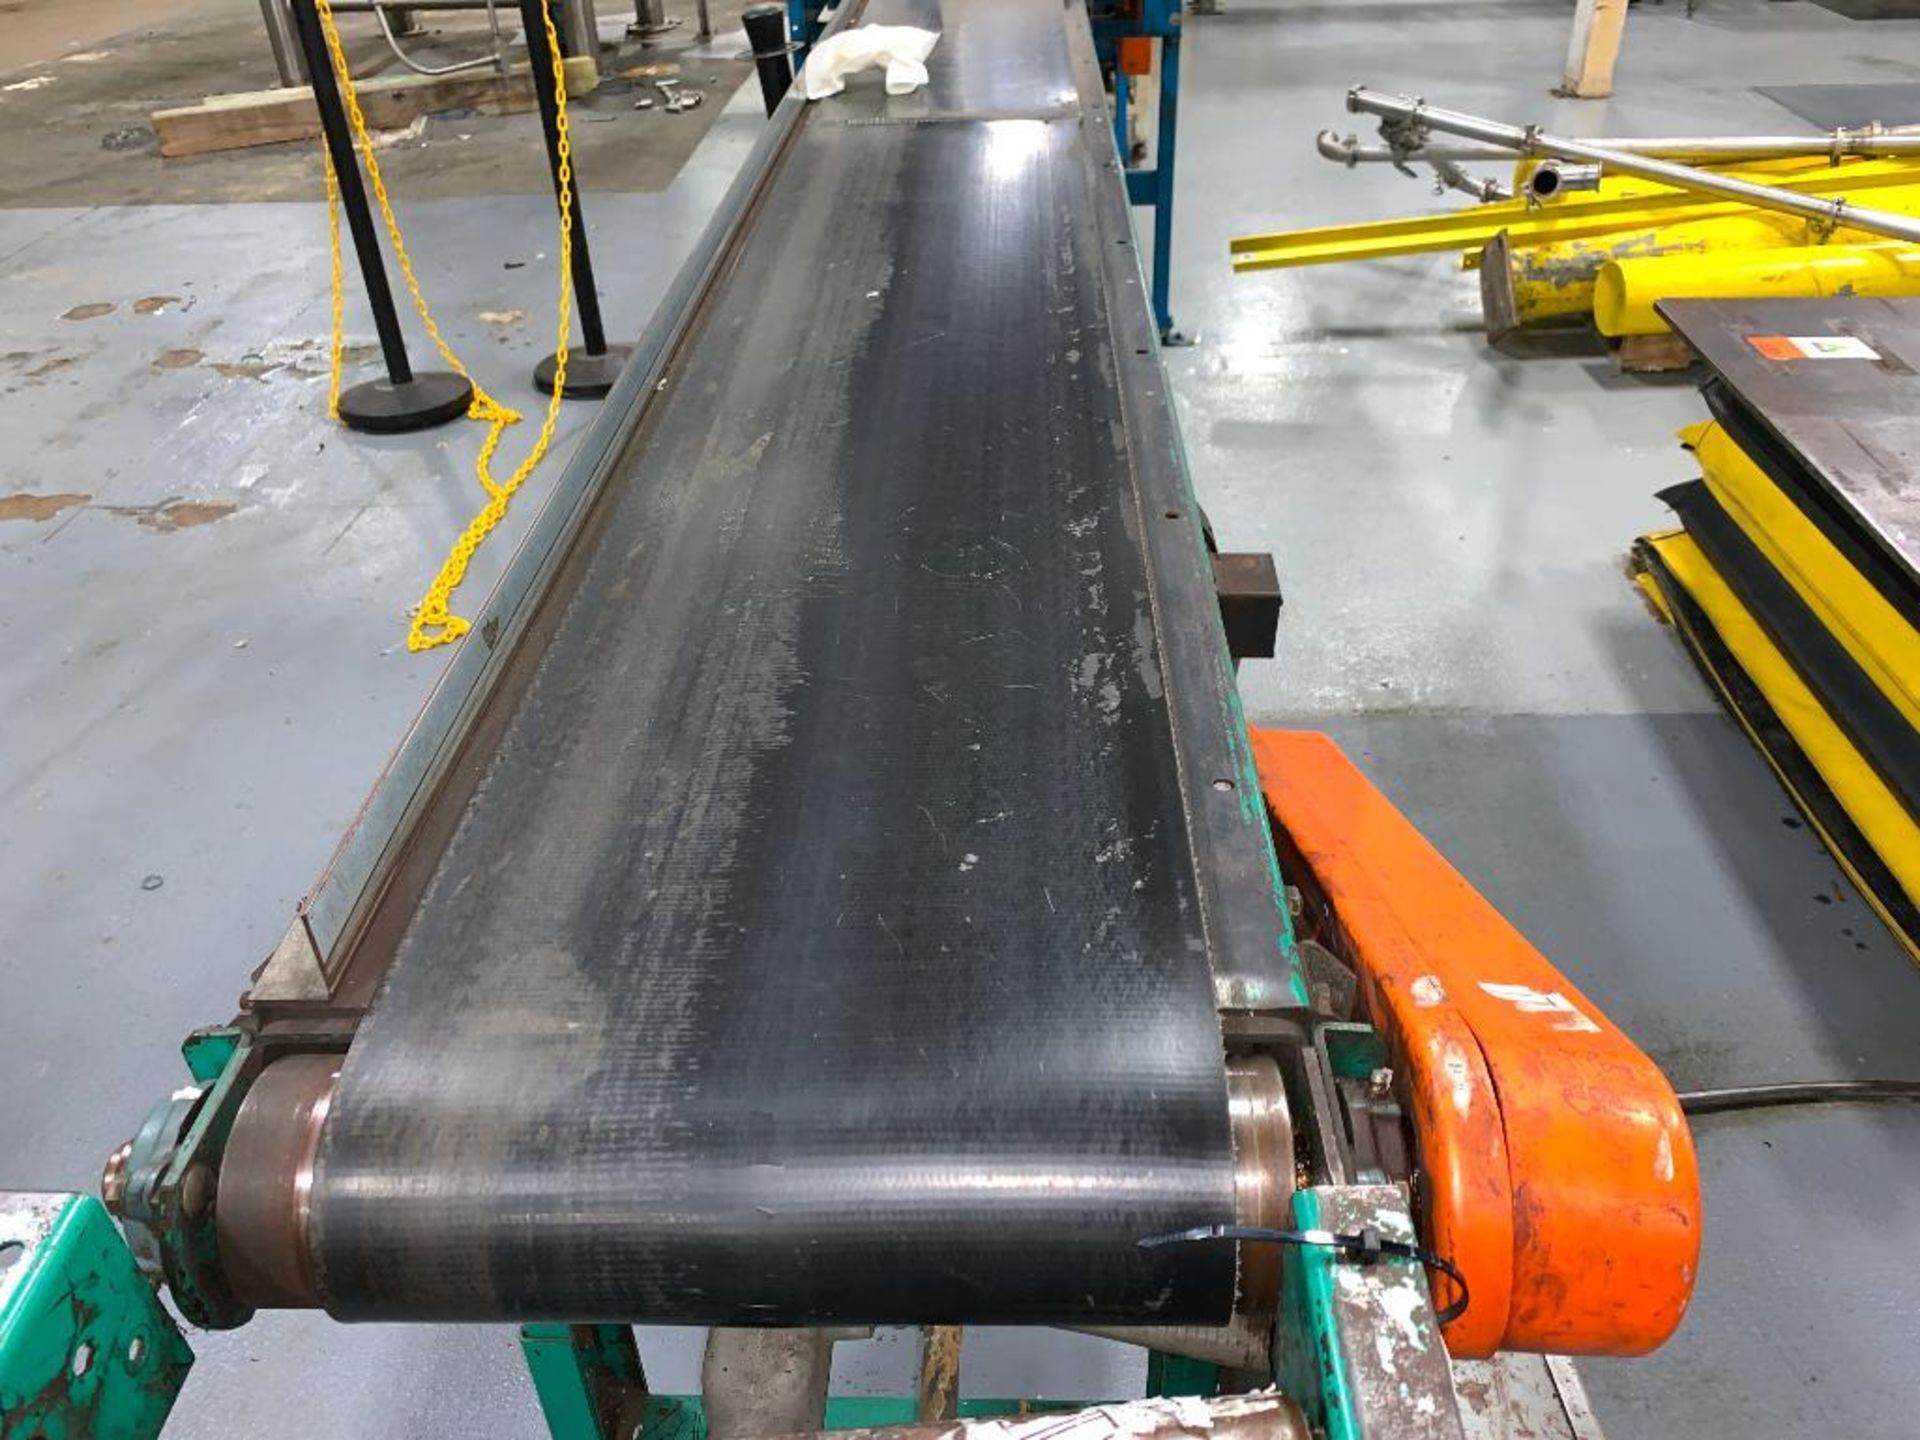 Hytrol mild steel conveyor, 126 in. x 14 in. x 36 in., black rubber belT - Image 7 of 7